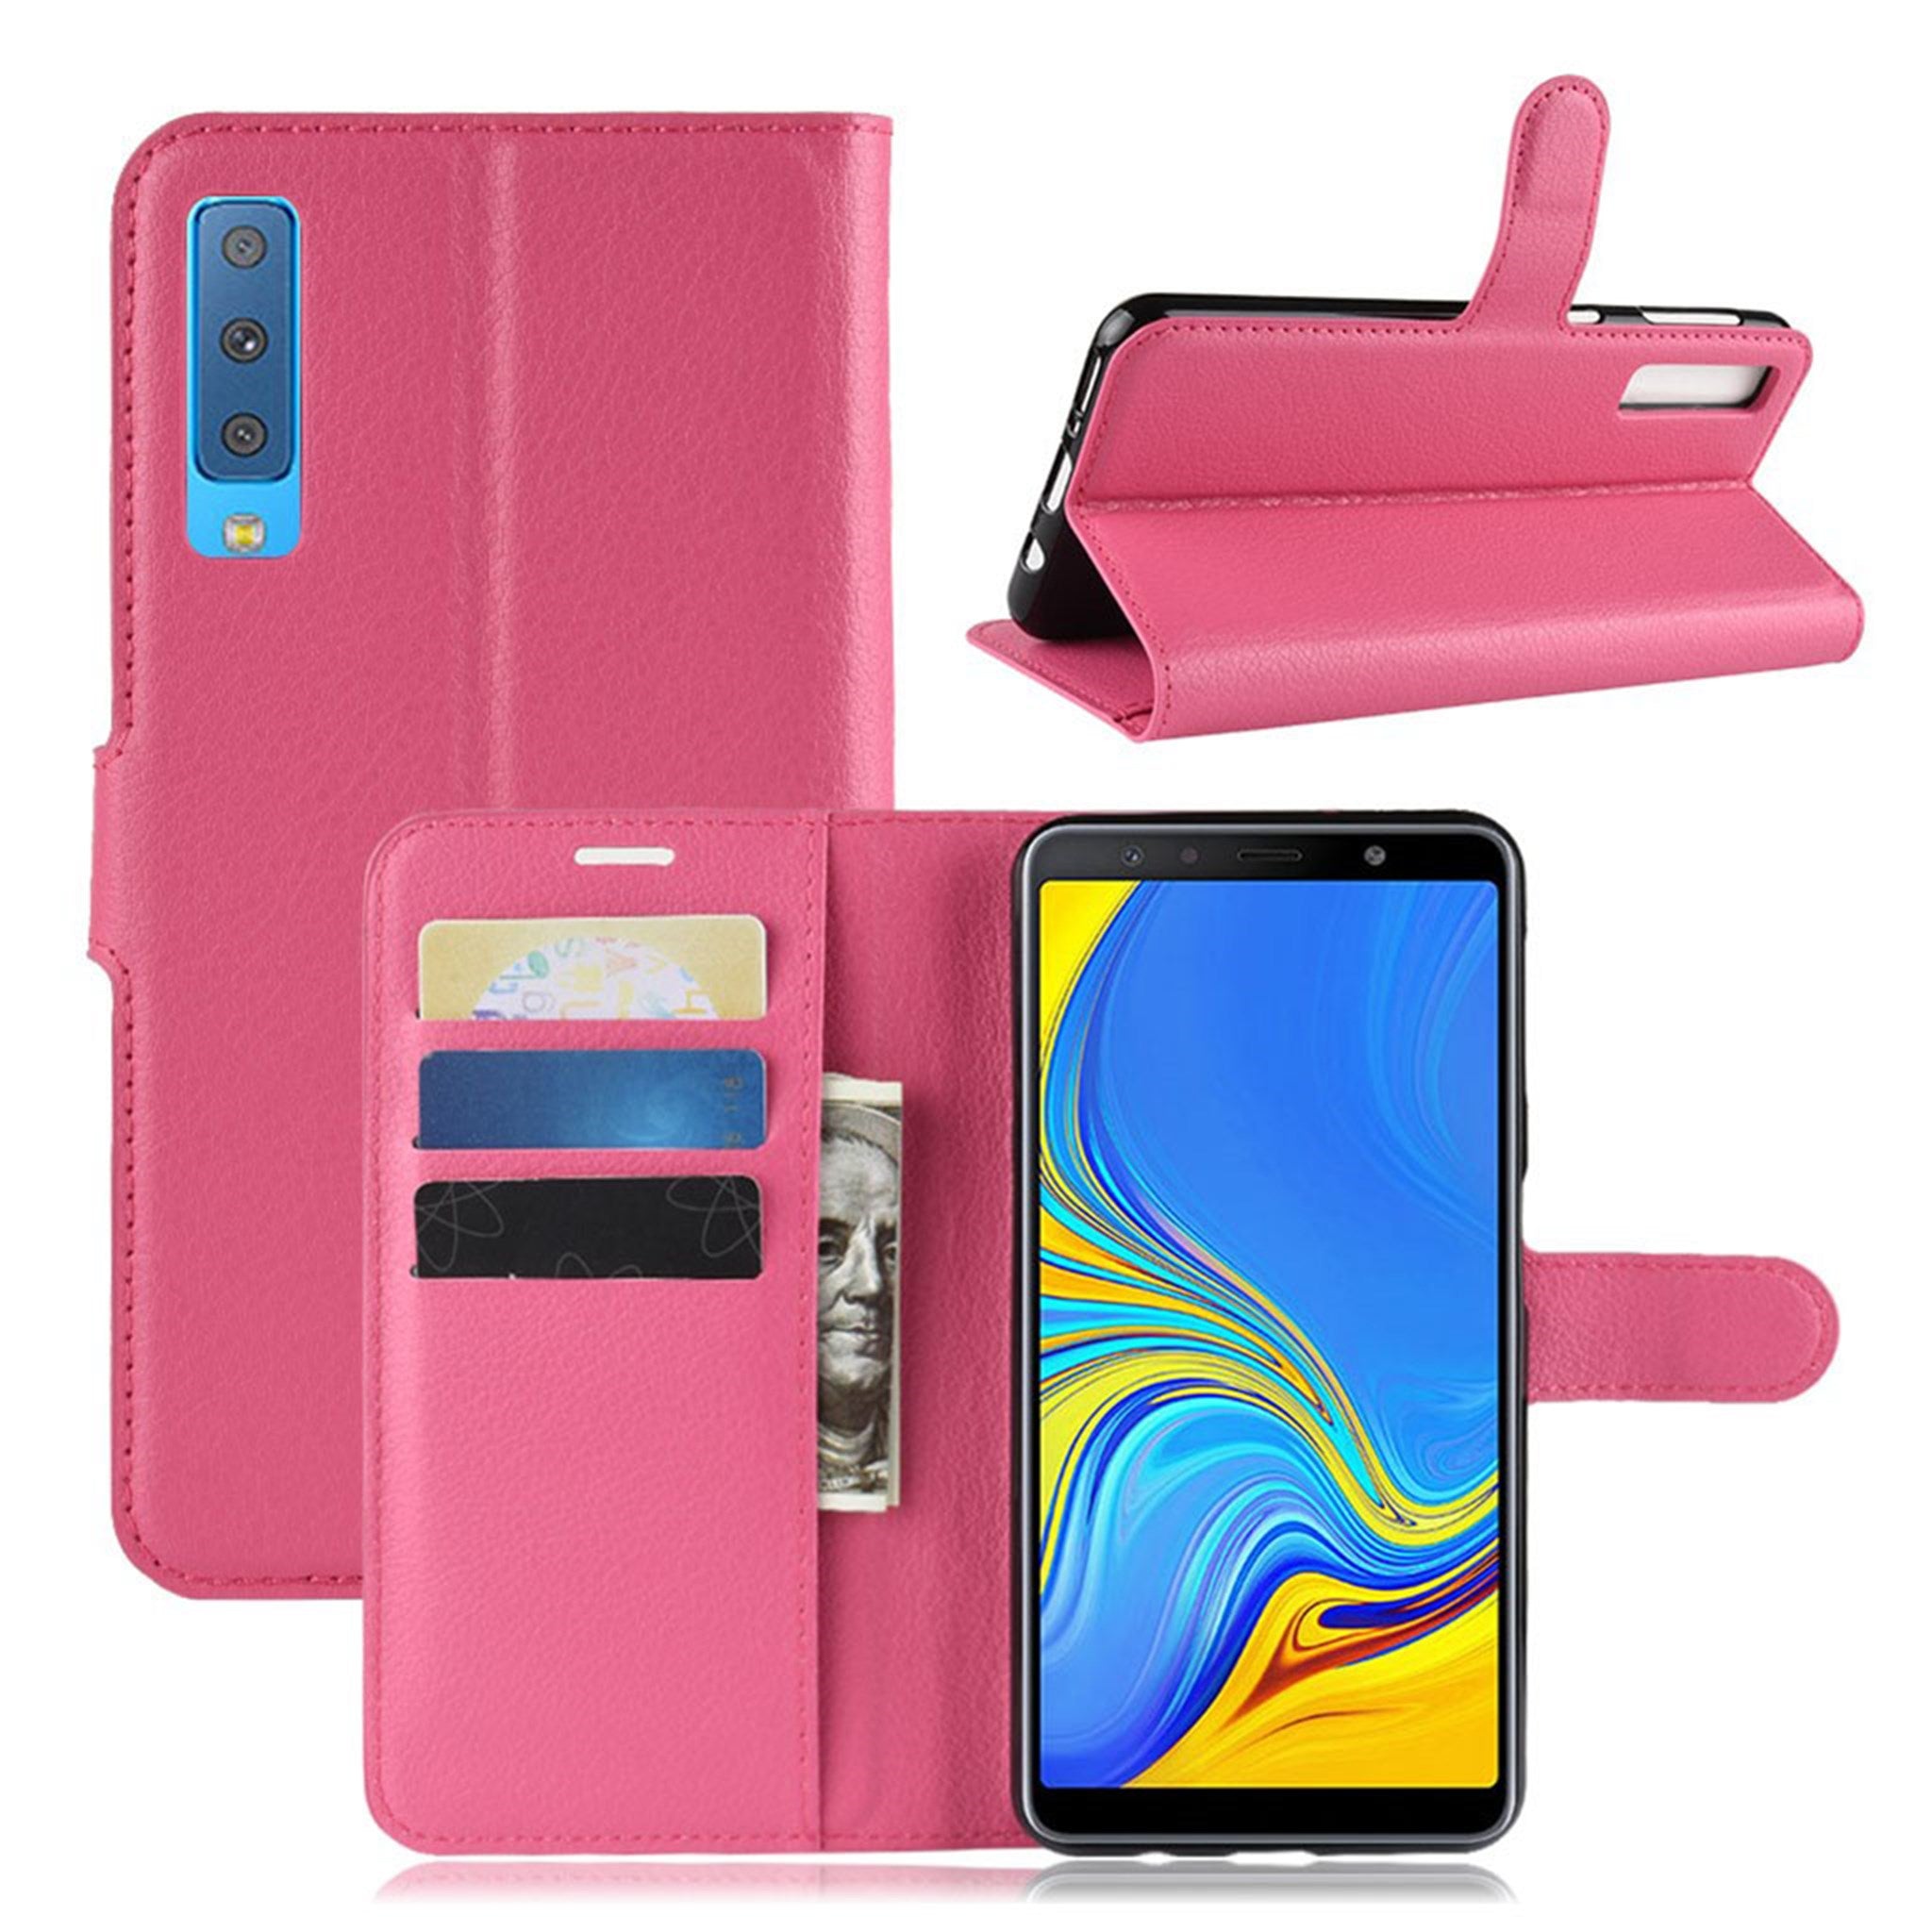 Samsung Galaxy A7 (2018) litchi skin leather flip case - Rose